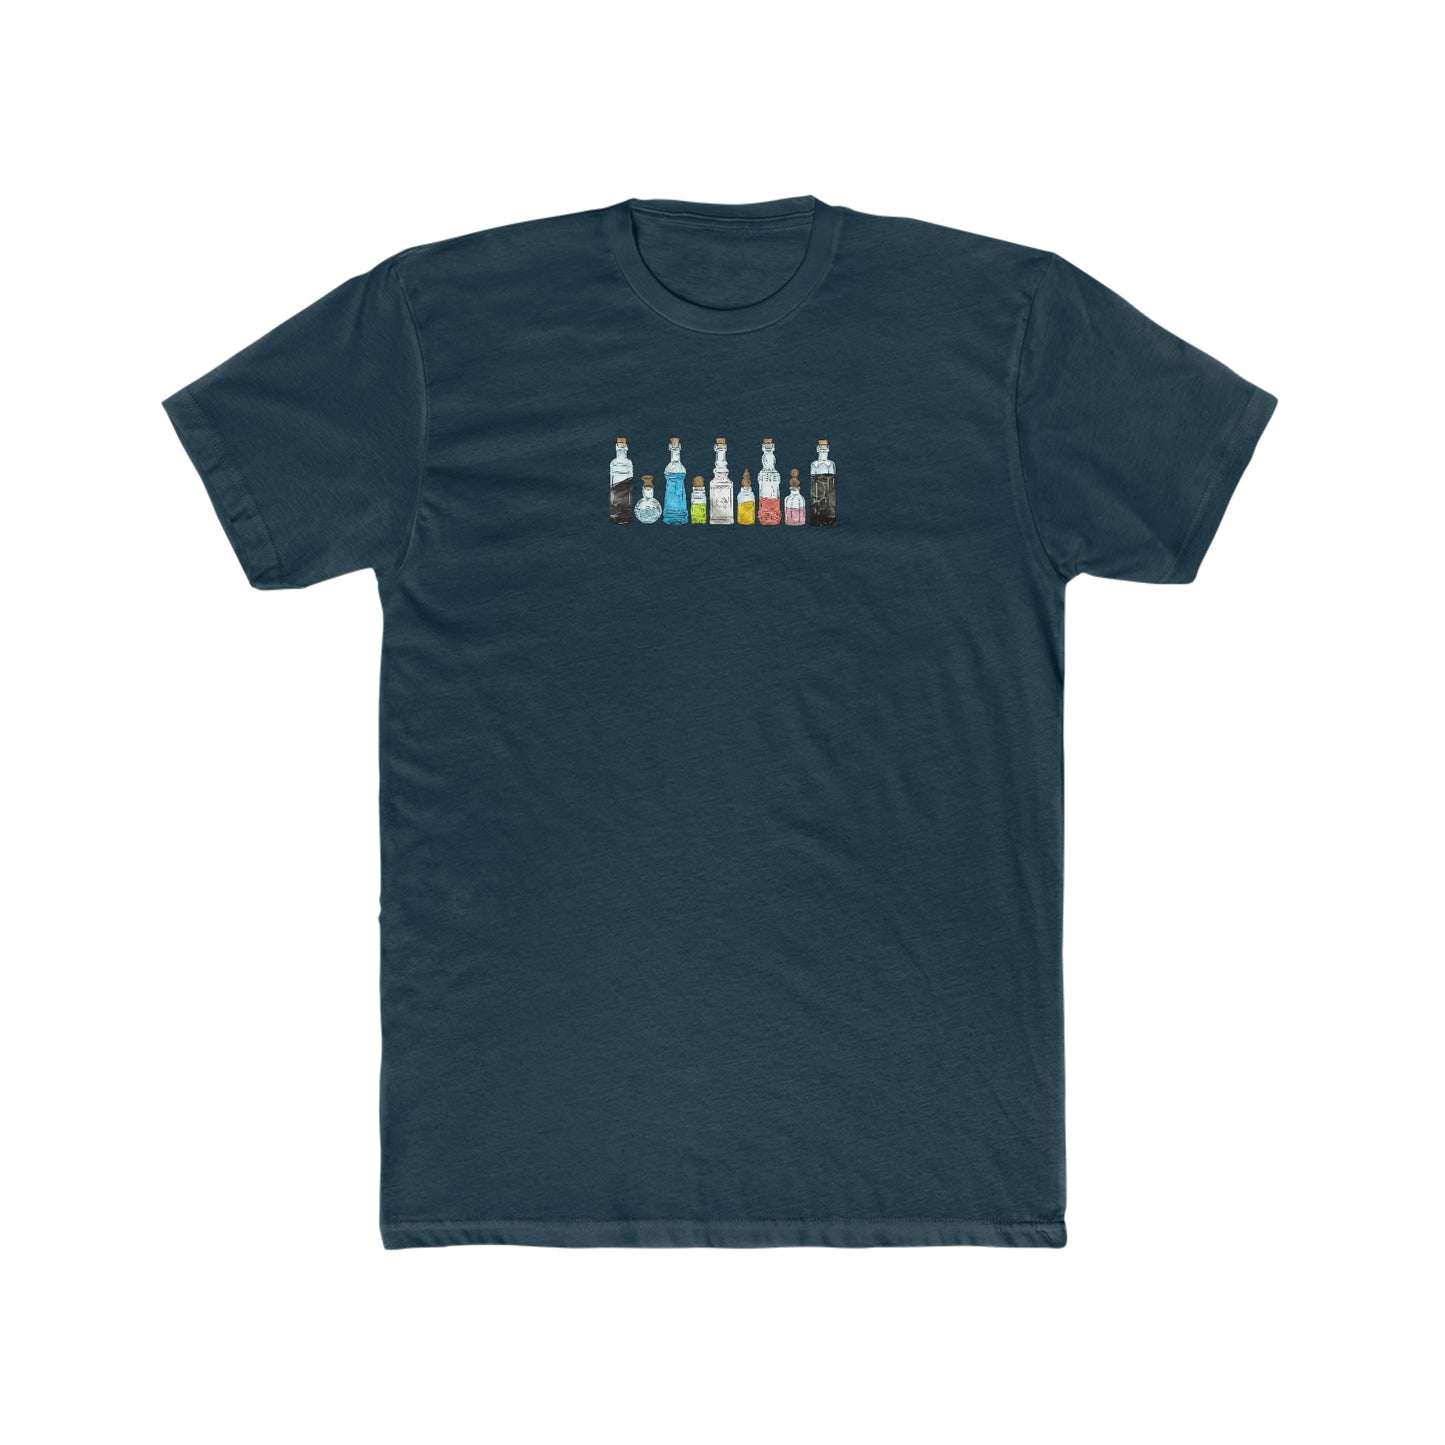 Queer Pride Potion Bottles - Men's T-Shirt